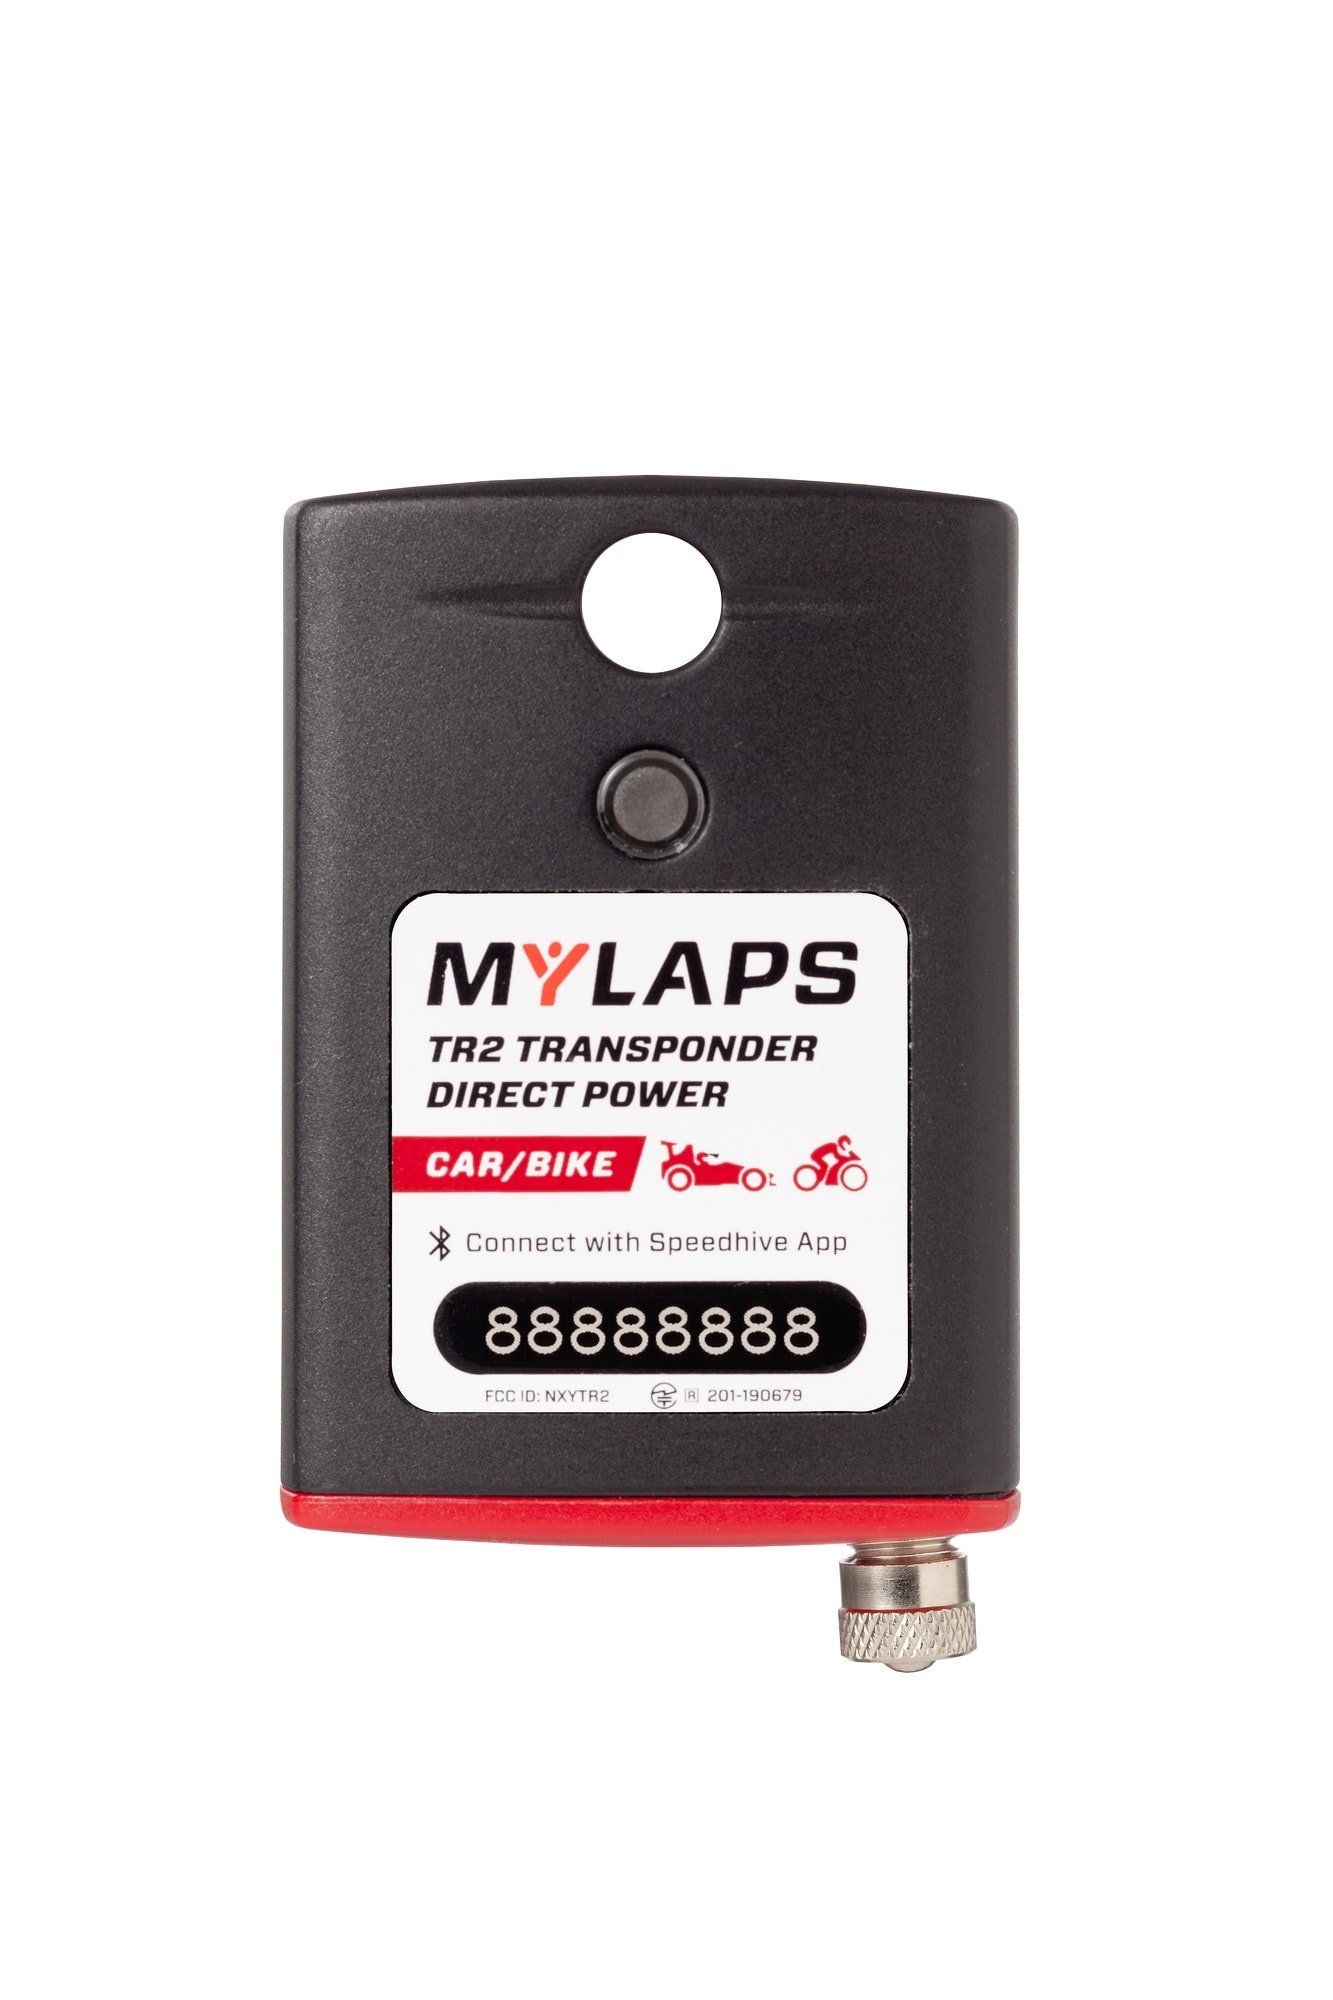 Transponder MyLaps TR2 Car/MC Direct Power 2 year